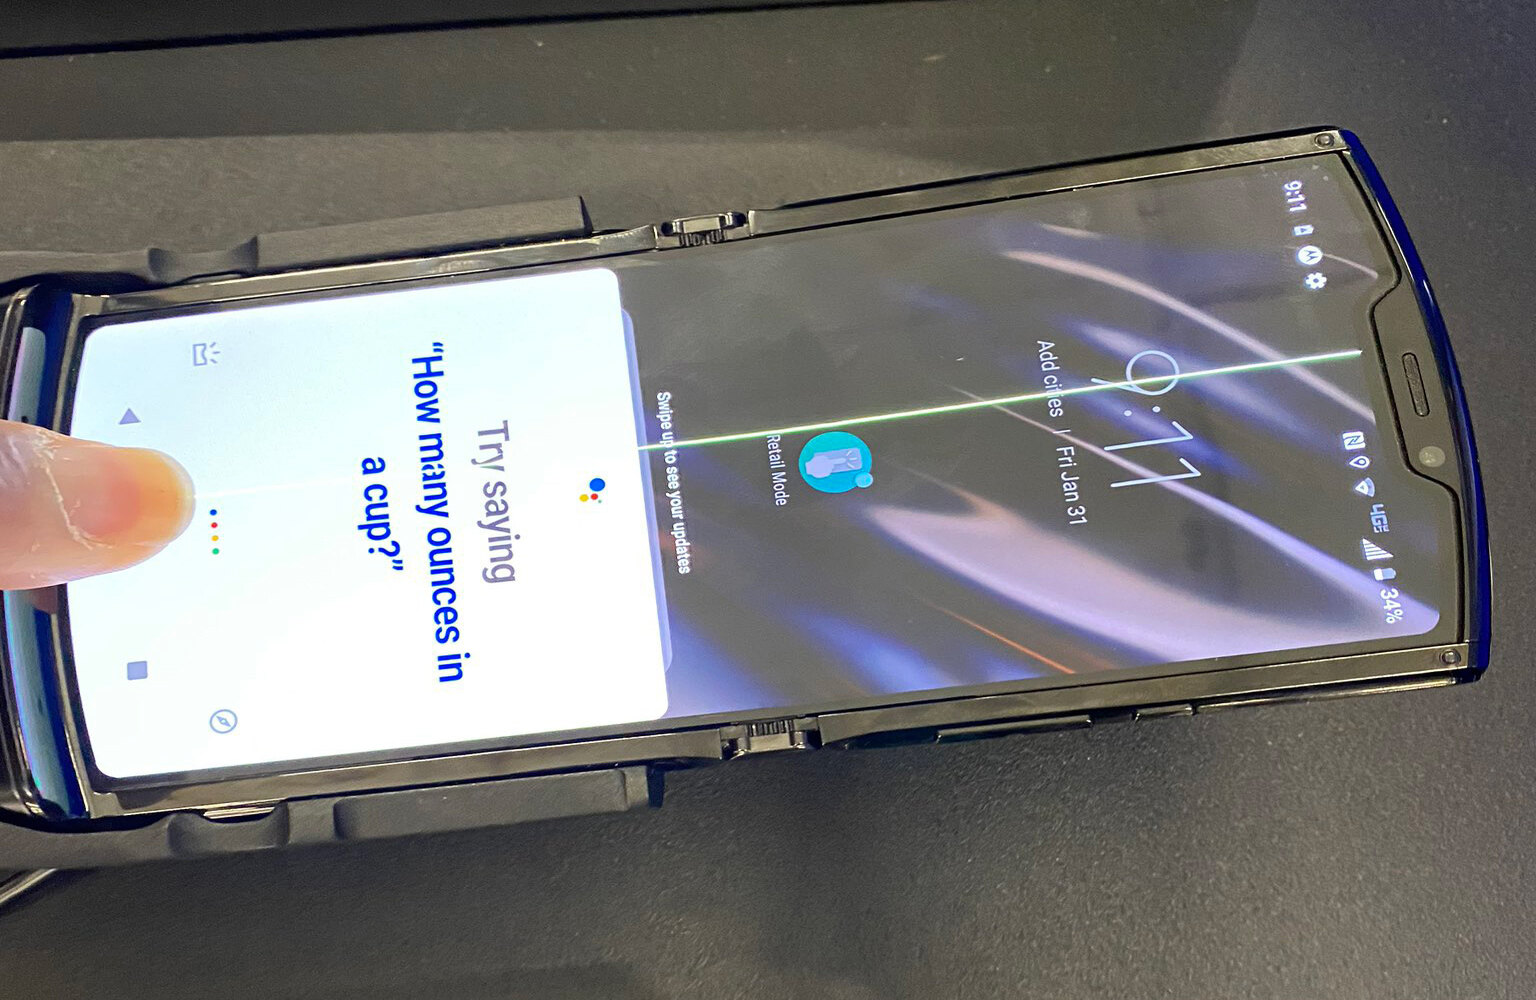 Troubleshooting: Transferring Files With A Broken Screen On Motorola Razr CDMA Flip Phone